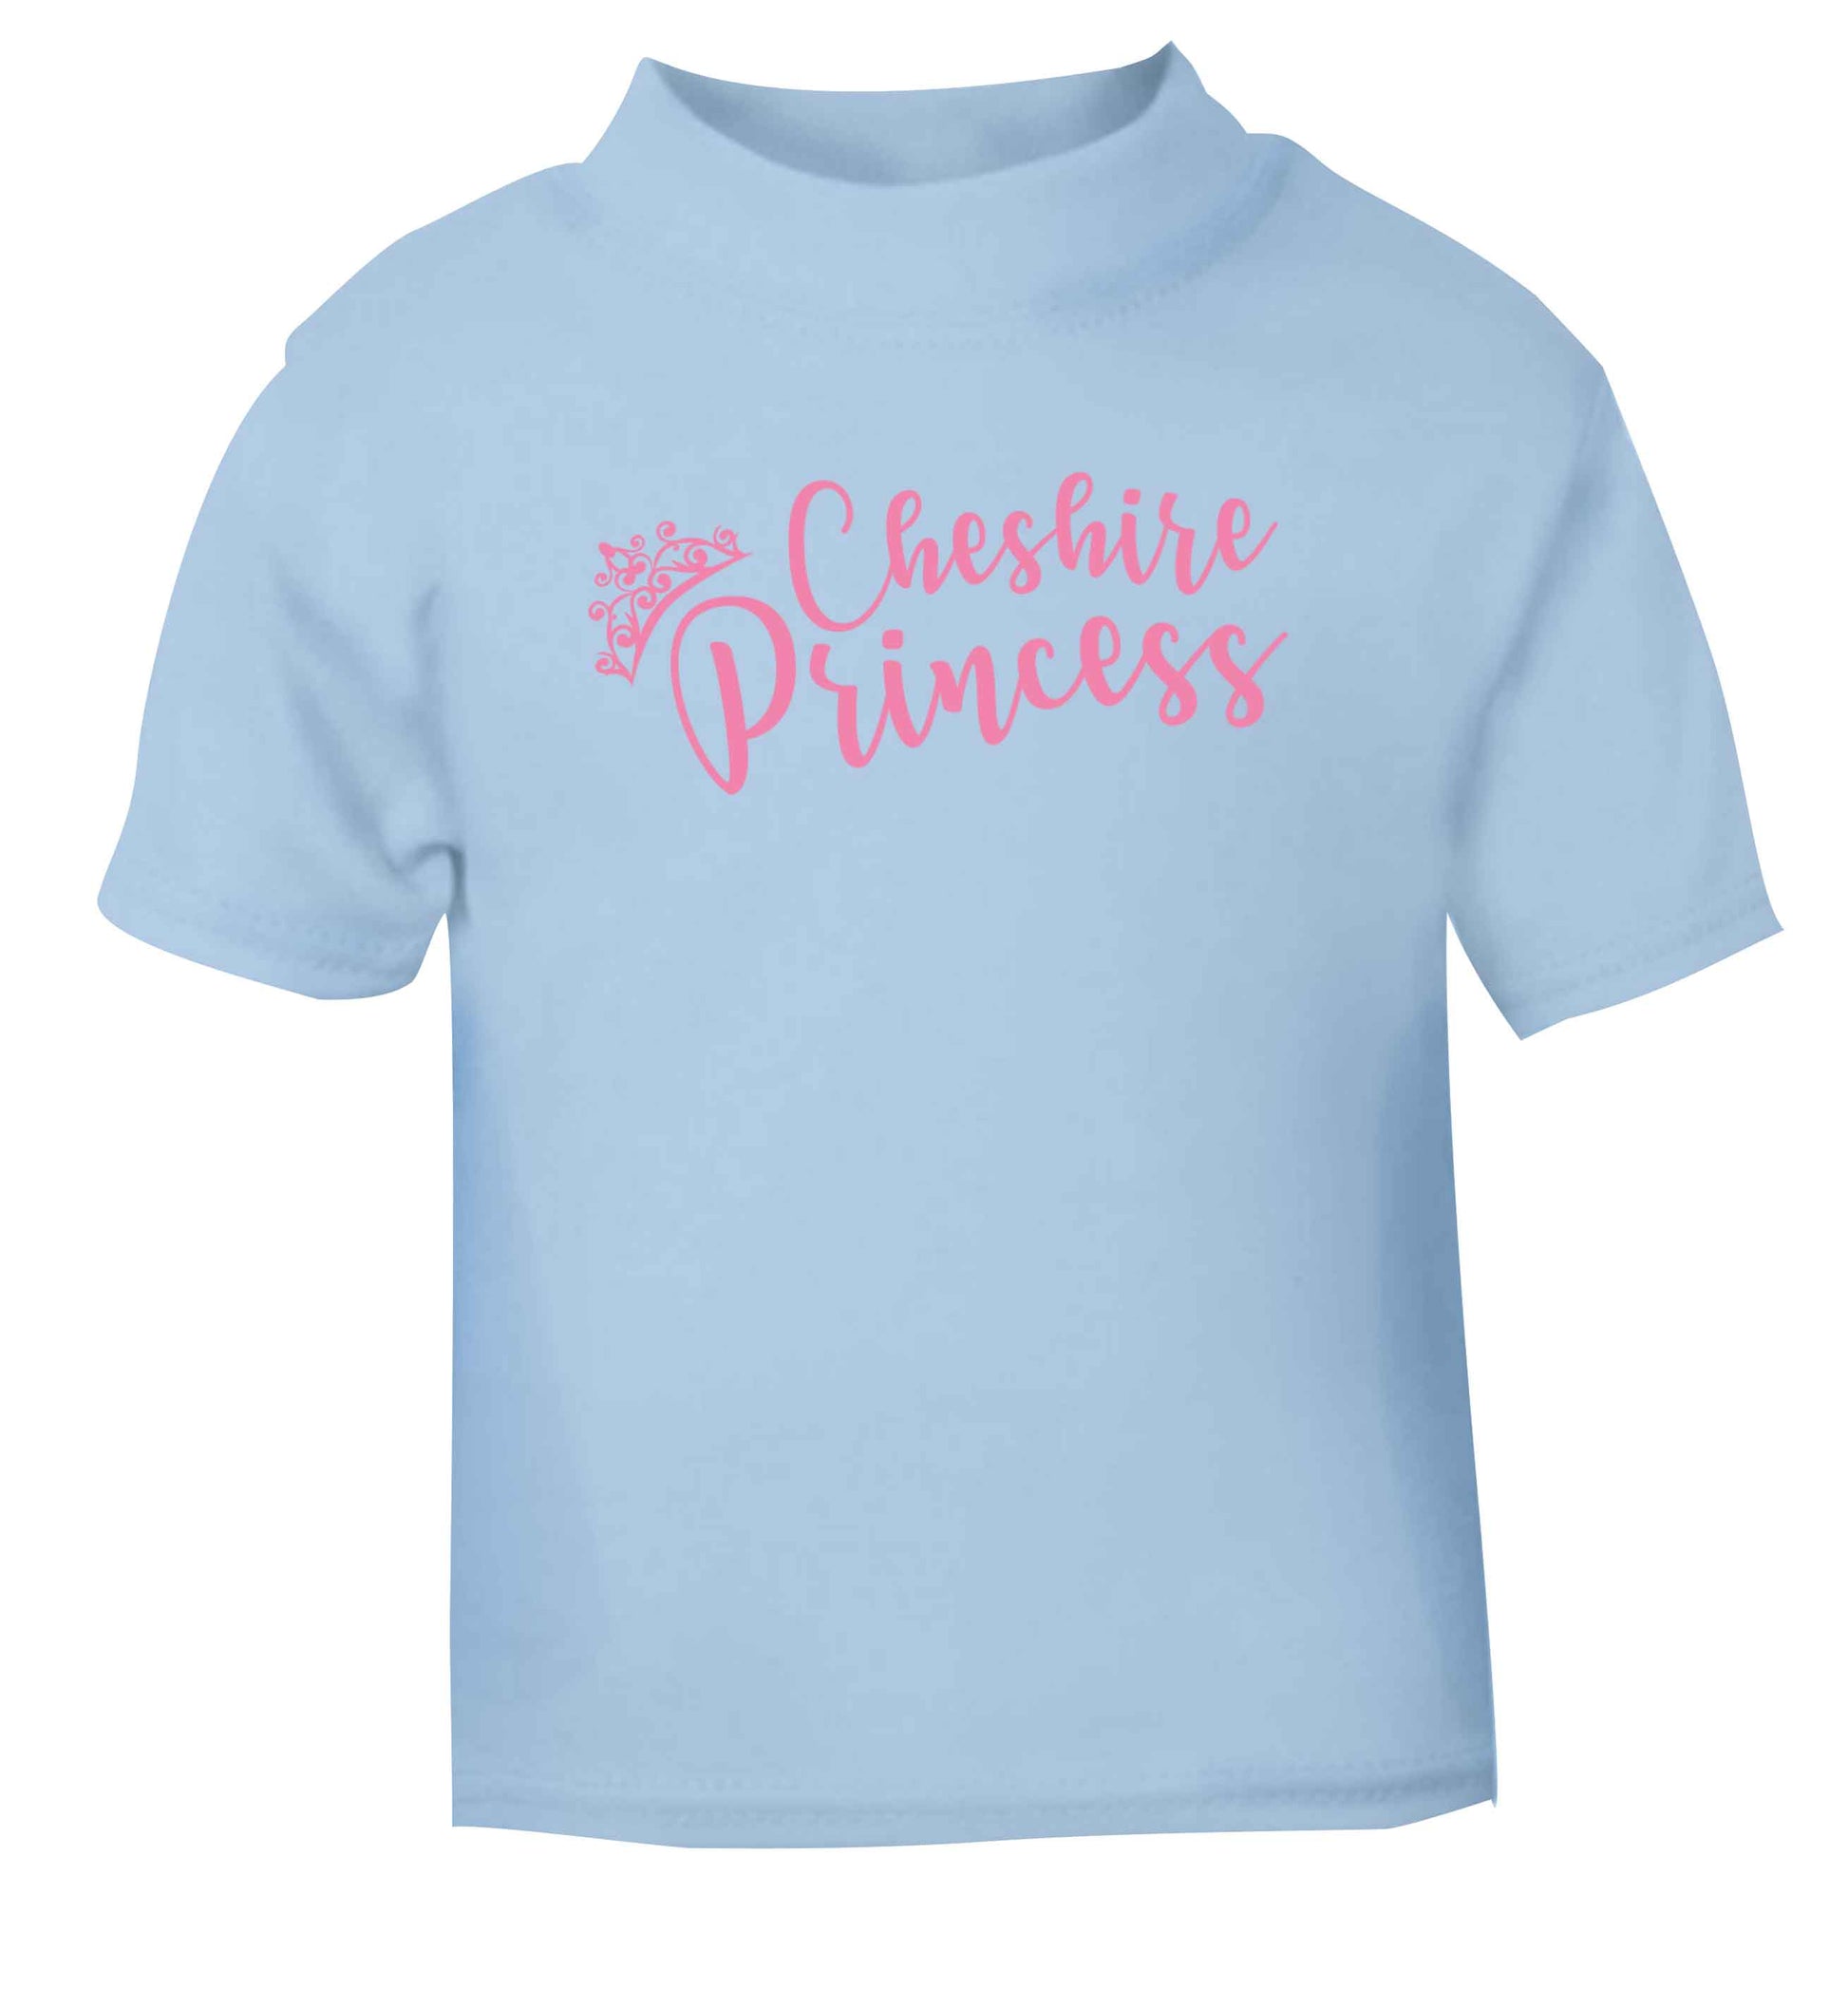 Cheshire princess light blue Baby Toddler Tshirt 2 Years